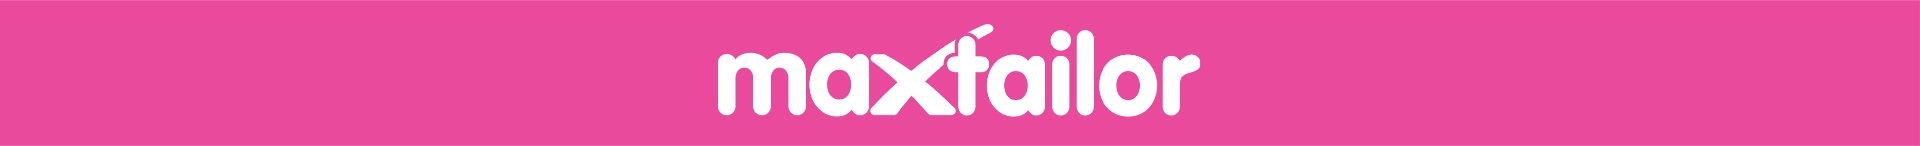 MaxTailor logo